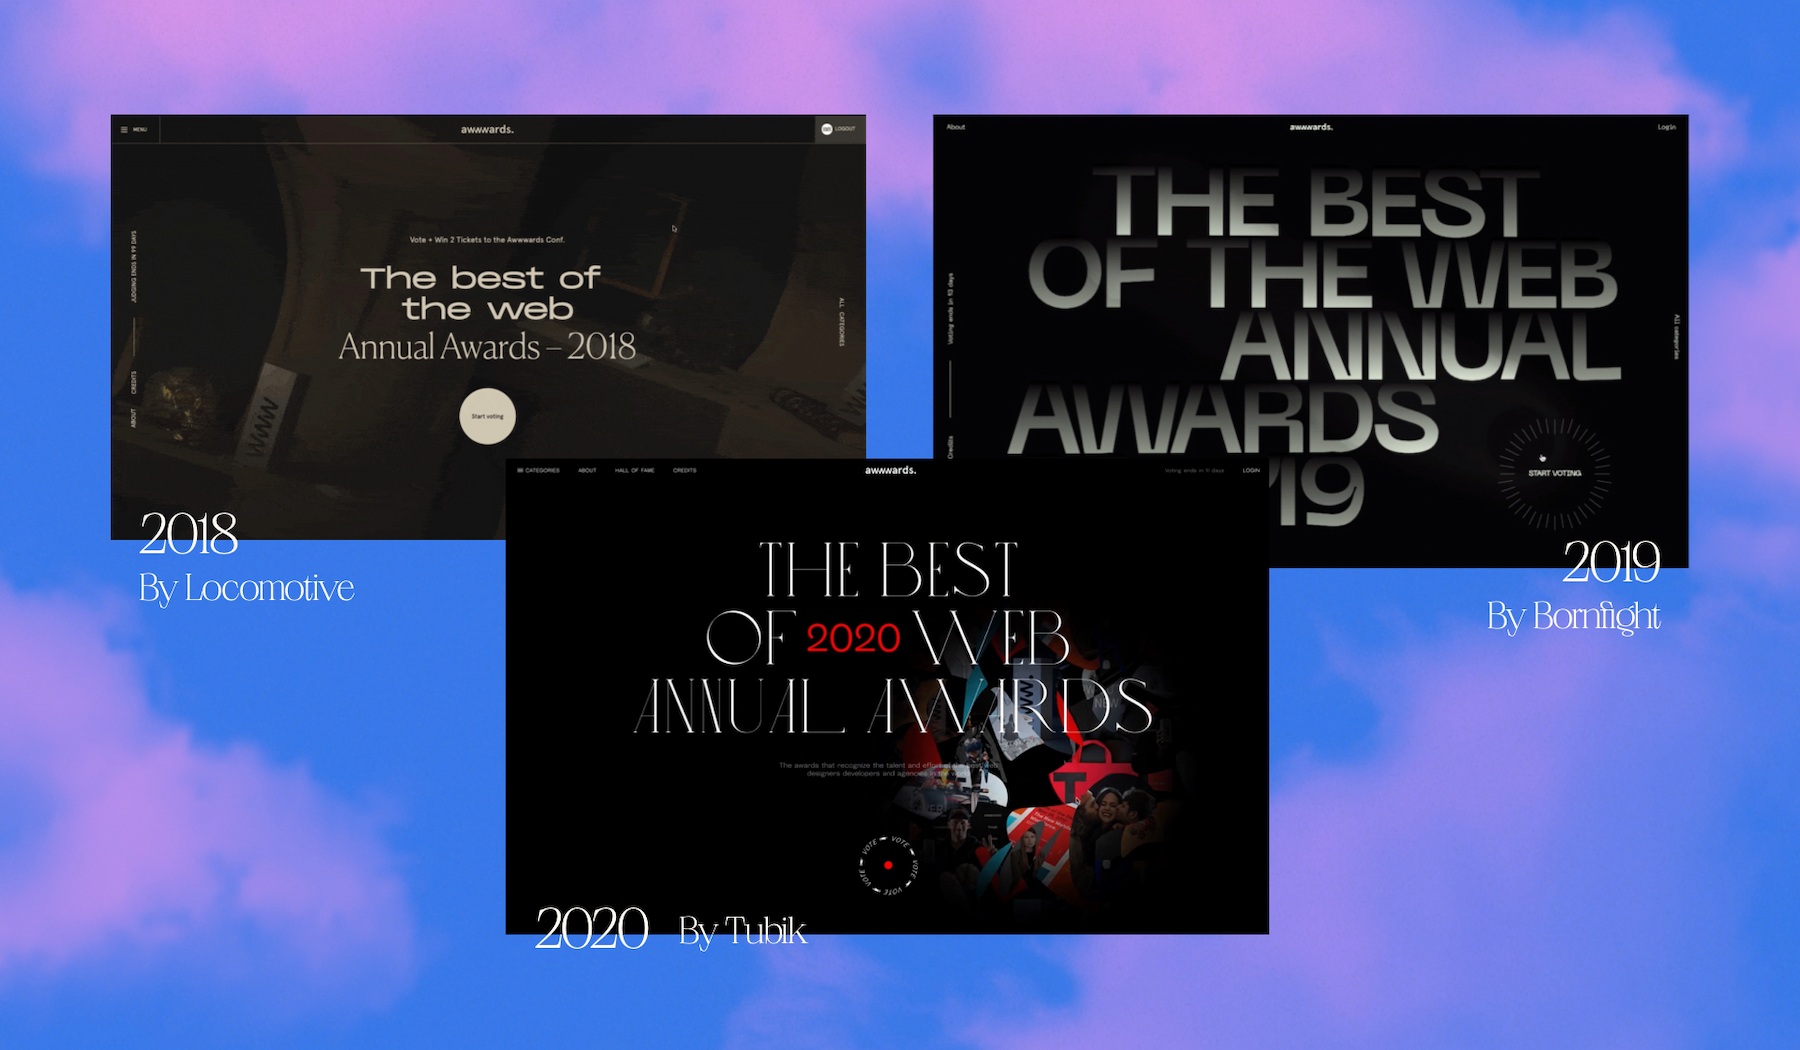 Previous Annual Awards sites